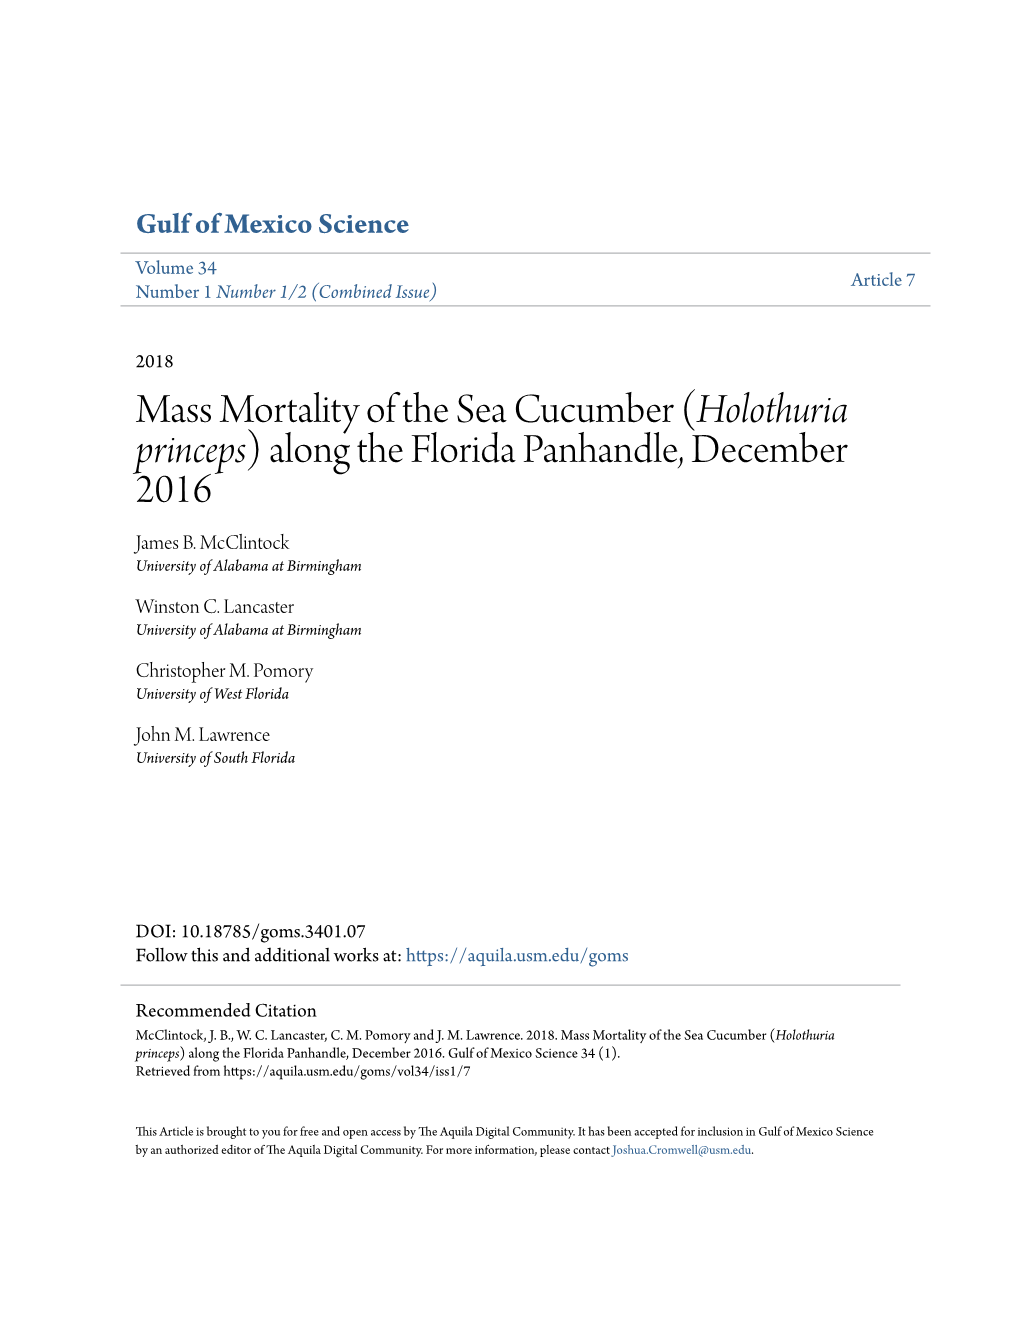 Mass Mortality of the Sea Cucumber (Holothuria Princeps) Along the Florida Panhandle, December 2016 James B